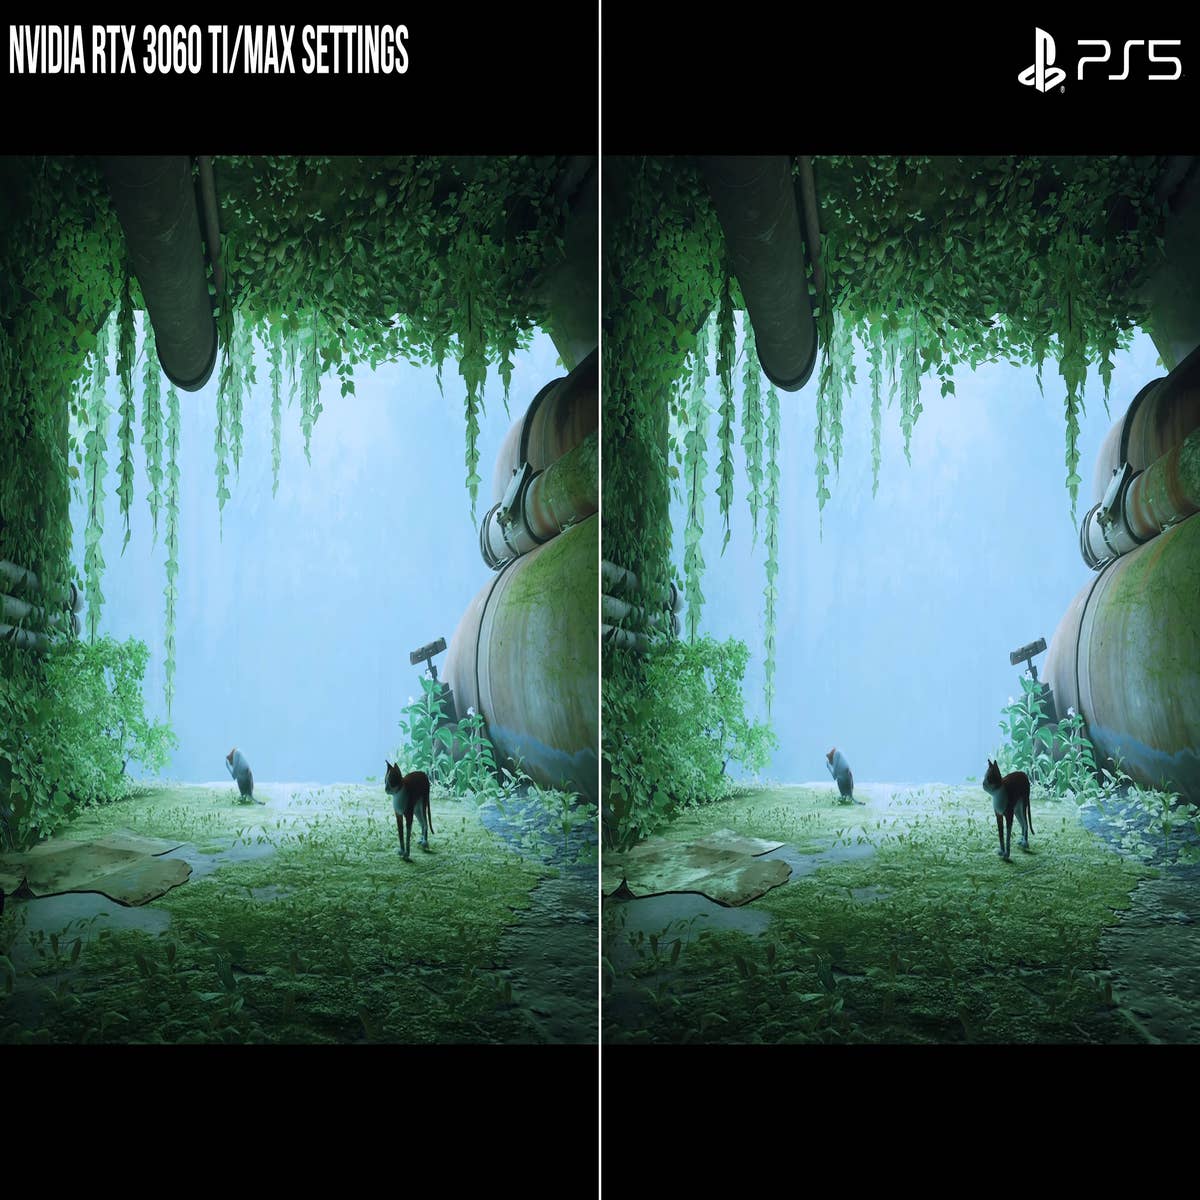 God of War PC vs PS5 & PS4 Comparison Highlights PC Improvements